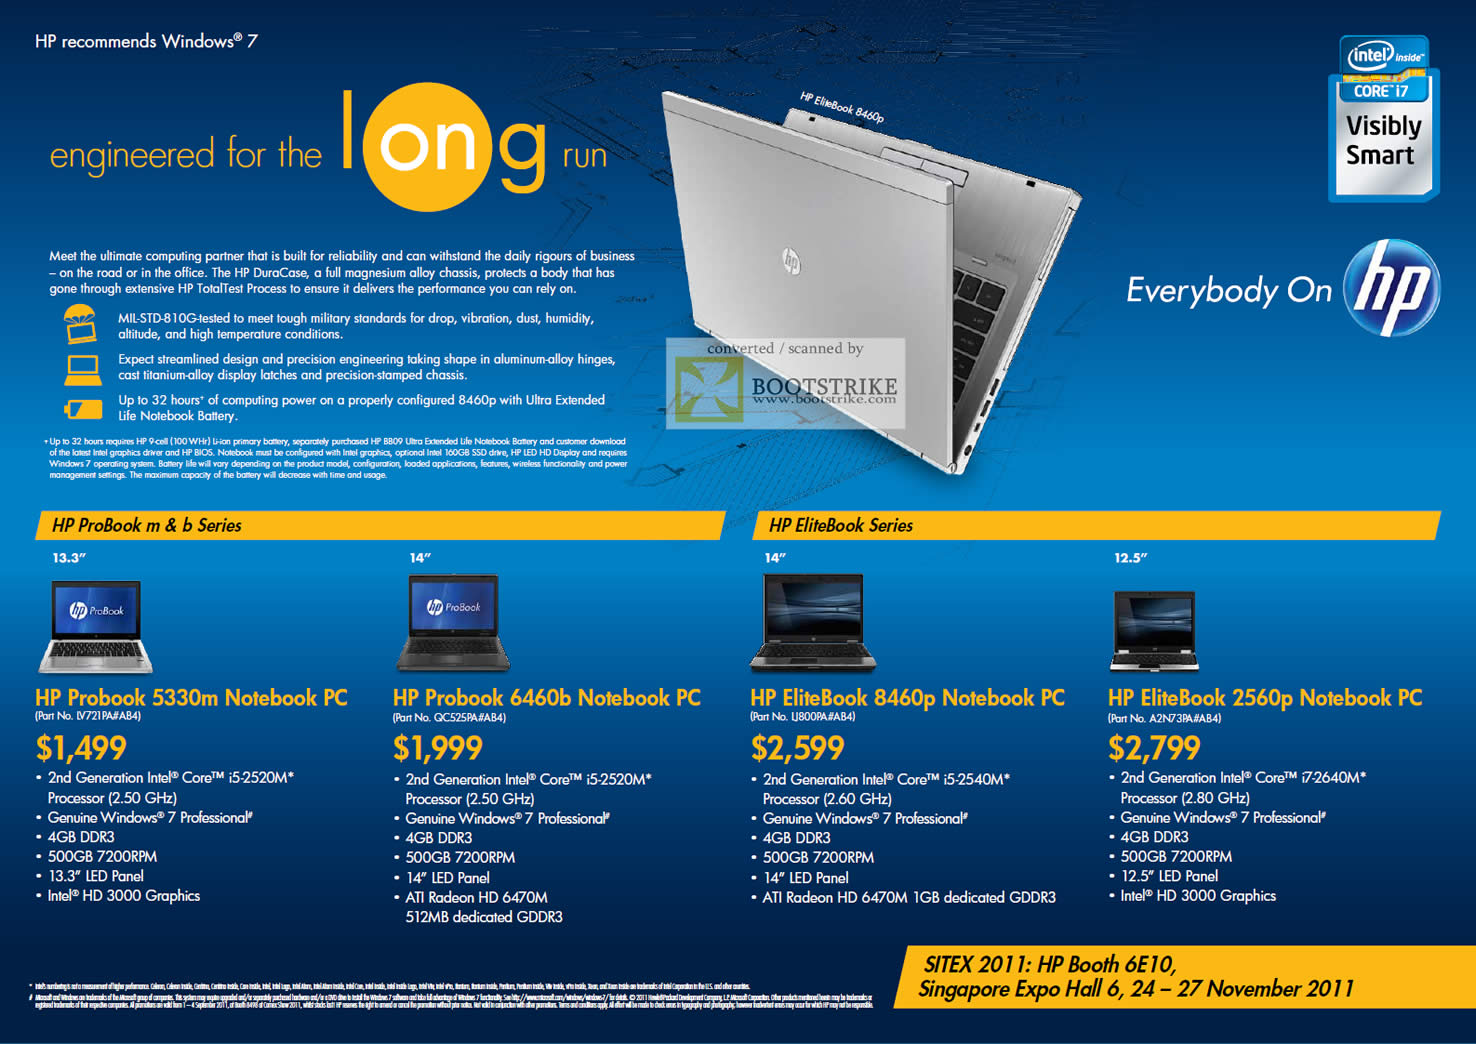 SITEX 2011 price list image brochure of HP Probook Notebooks 5330m, 6460b, Elitebook 8460p, 2560p